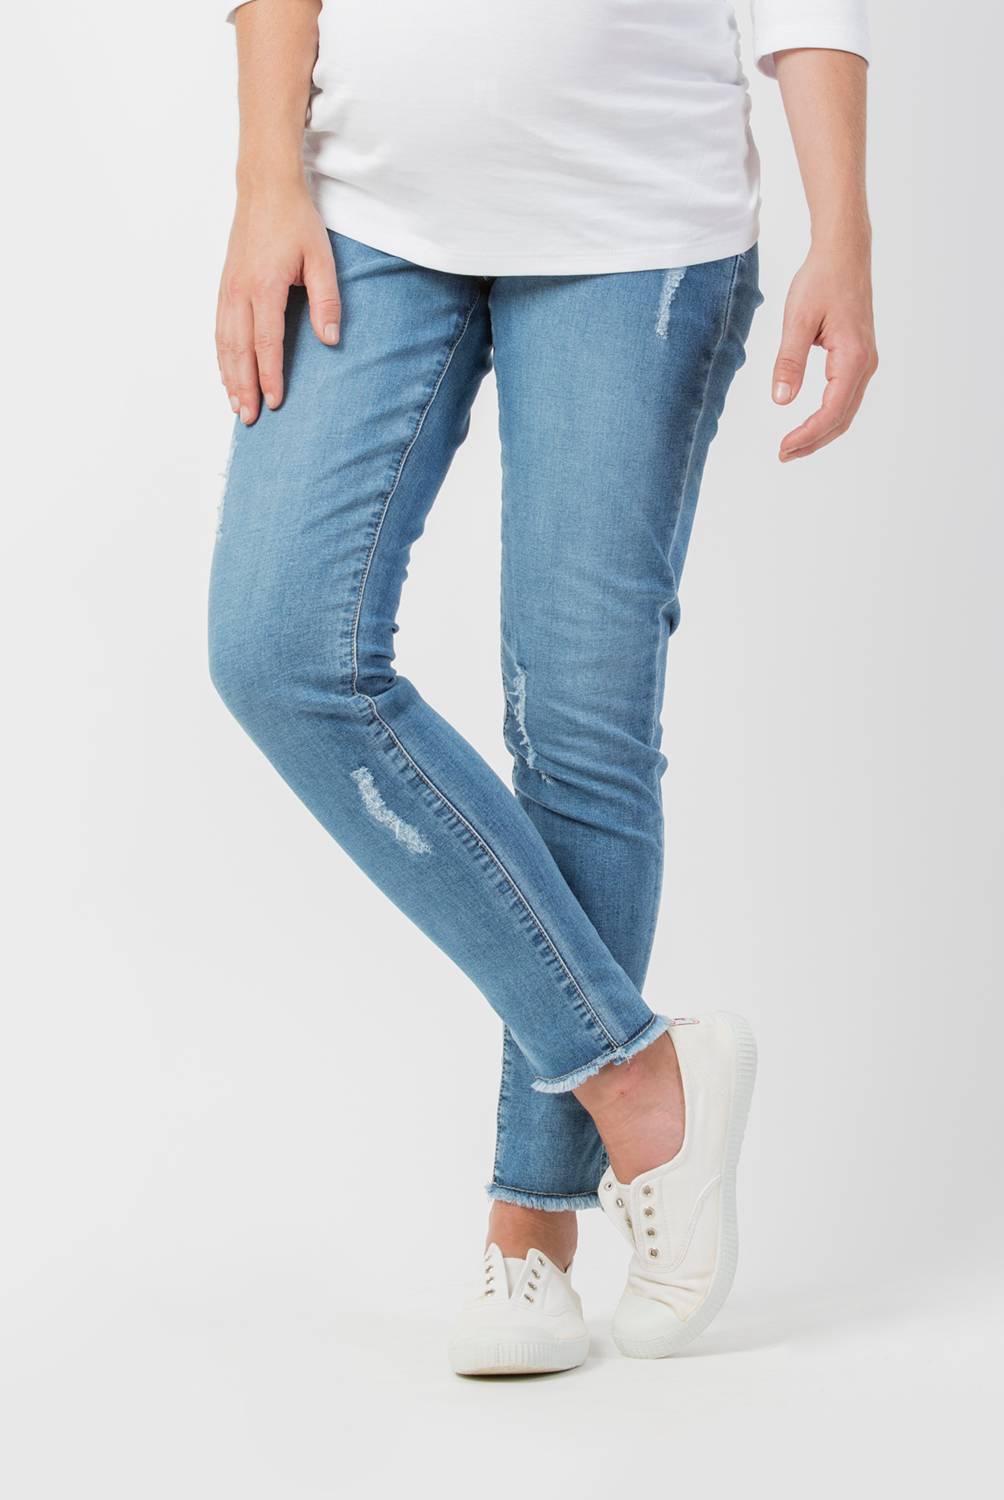 NALA - Nala Jeans de Algodón Boot cut Fit Mujer